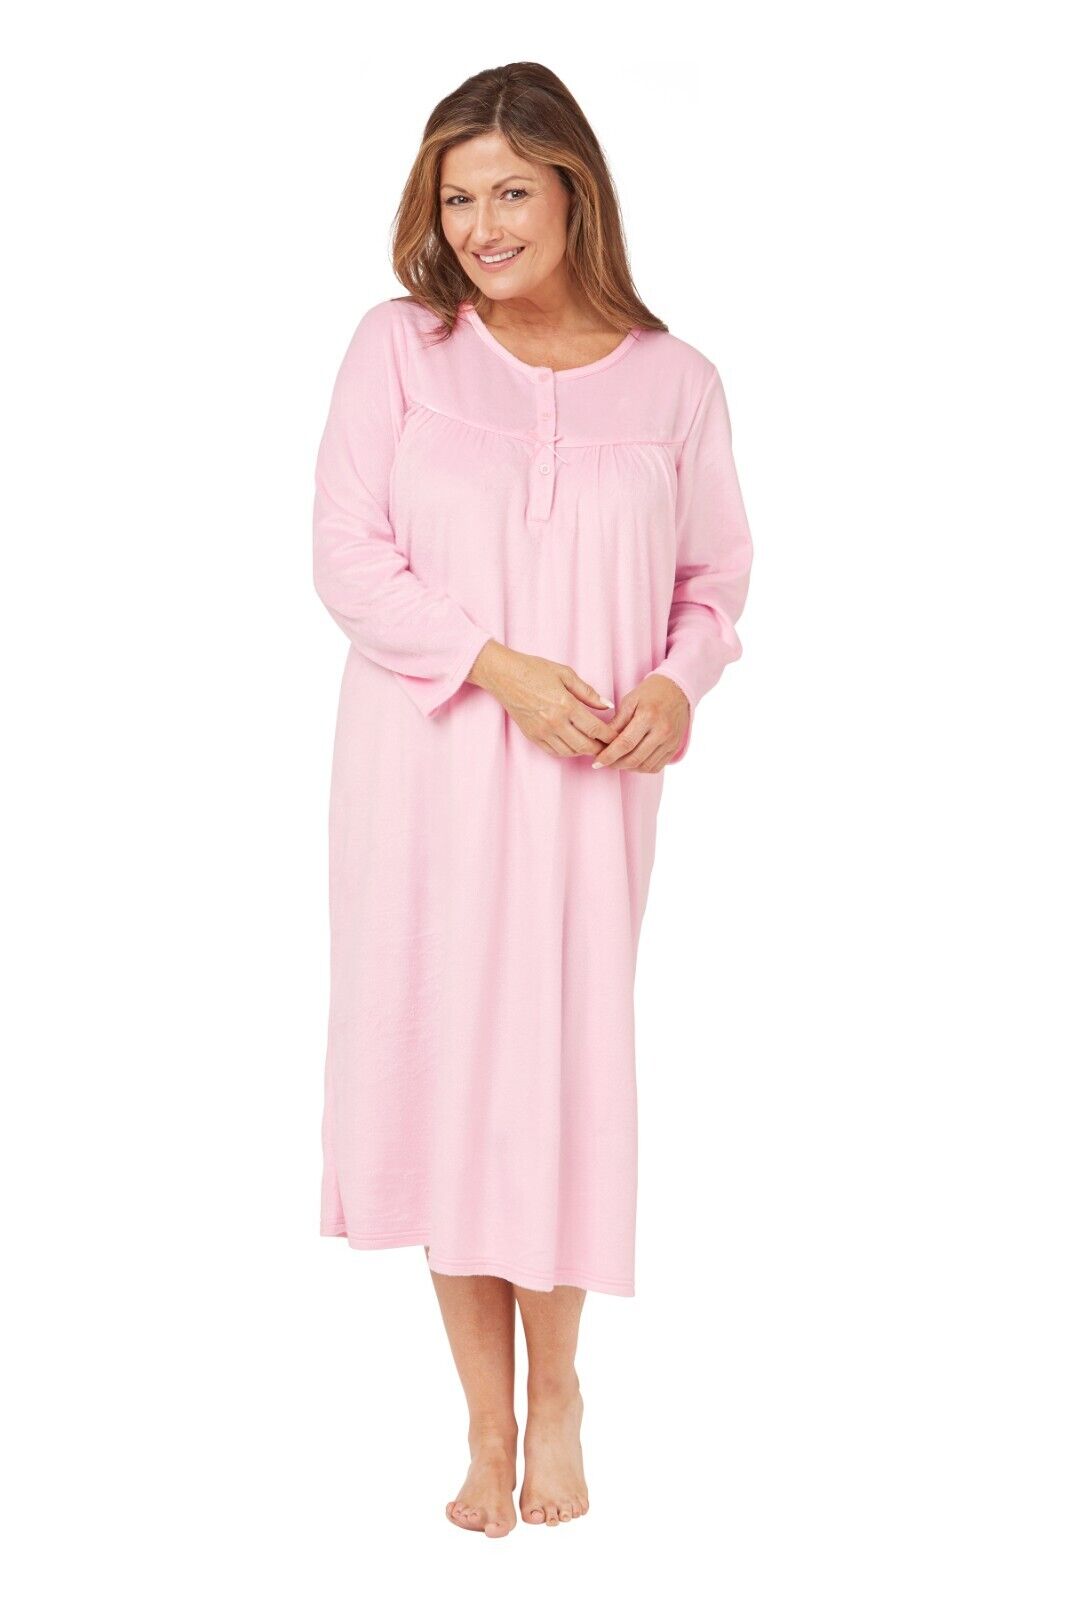 Ladies Fleece Fur Shimmery Nightdress Long Sleeve Nightdress Pink Blue Buttons